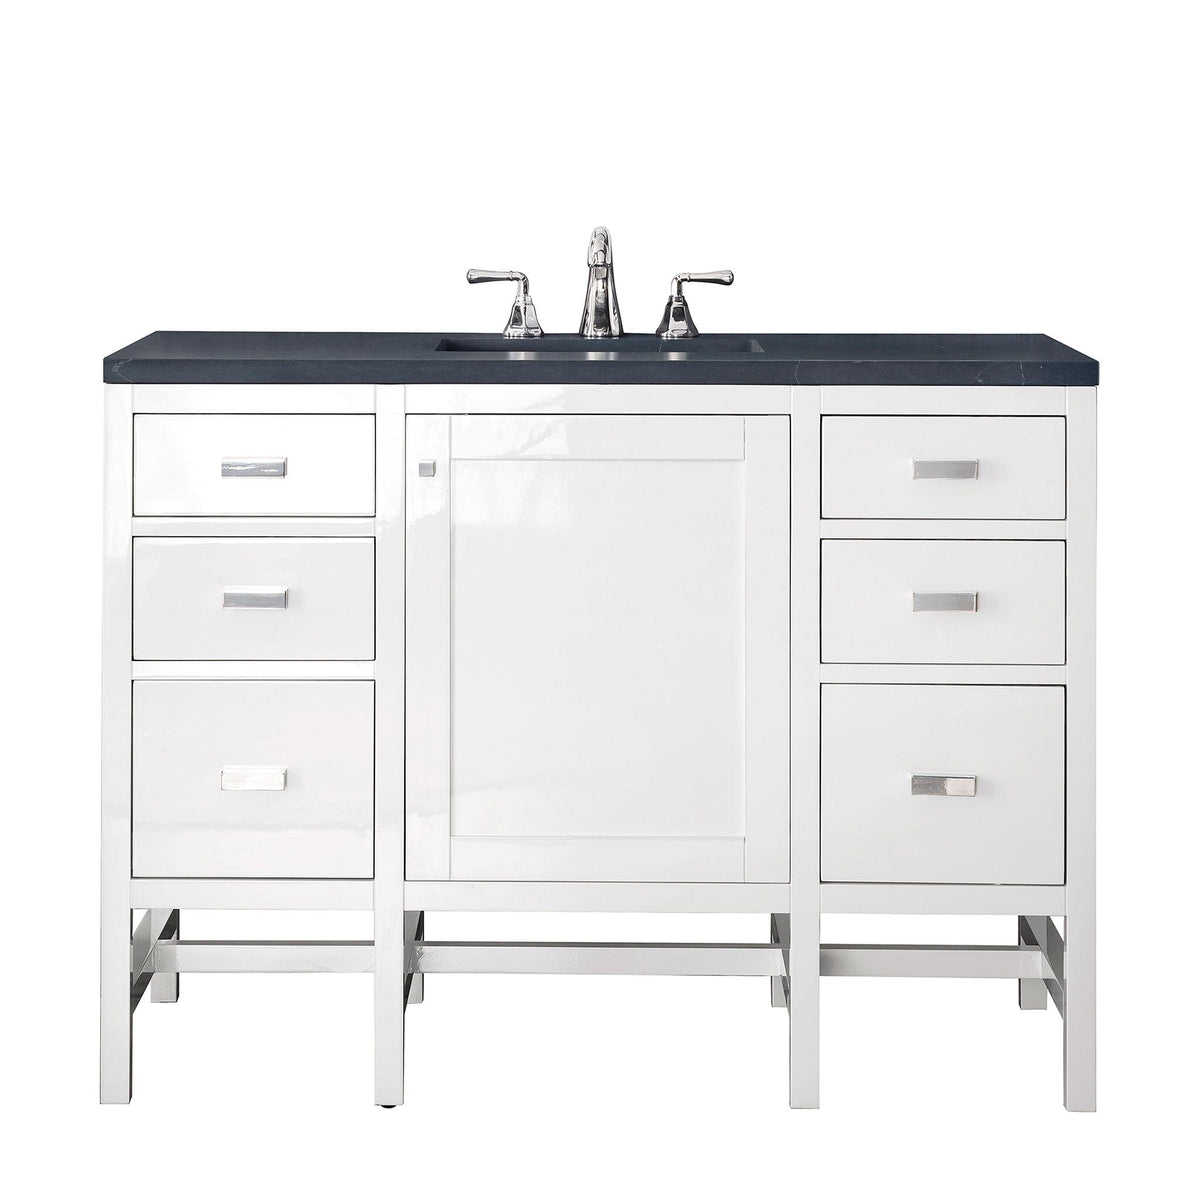 48" Addison Single Vanity Cabinet, Glossy White